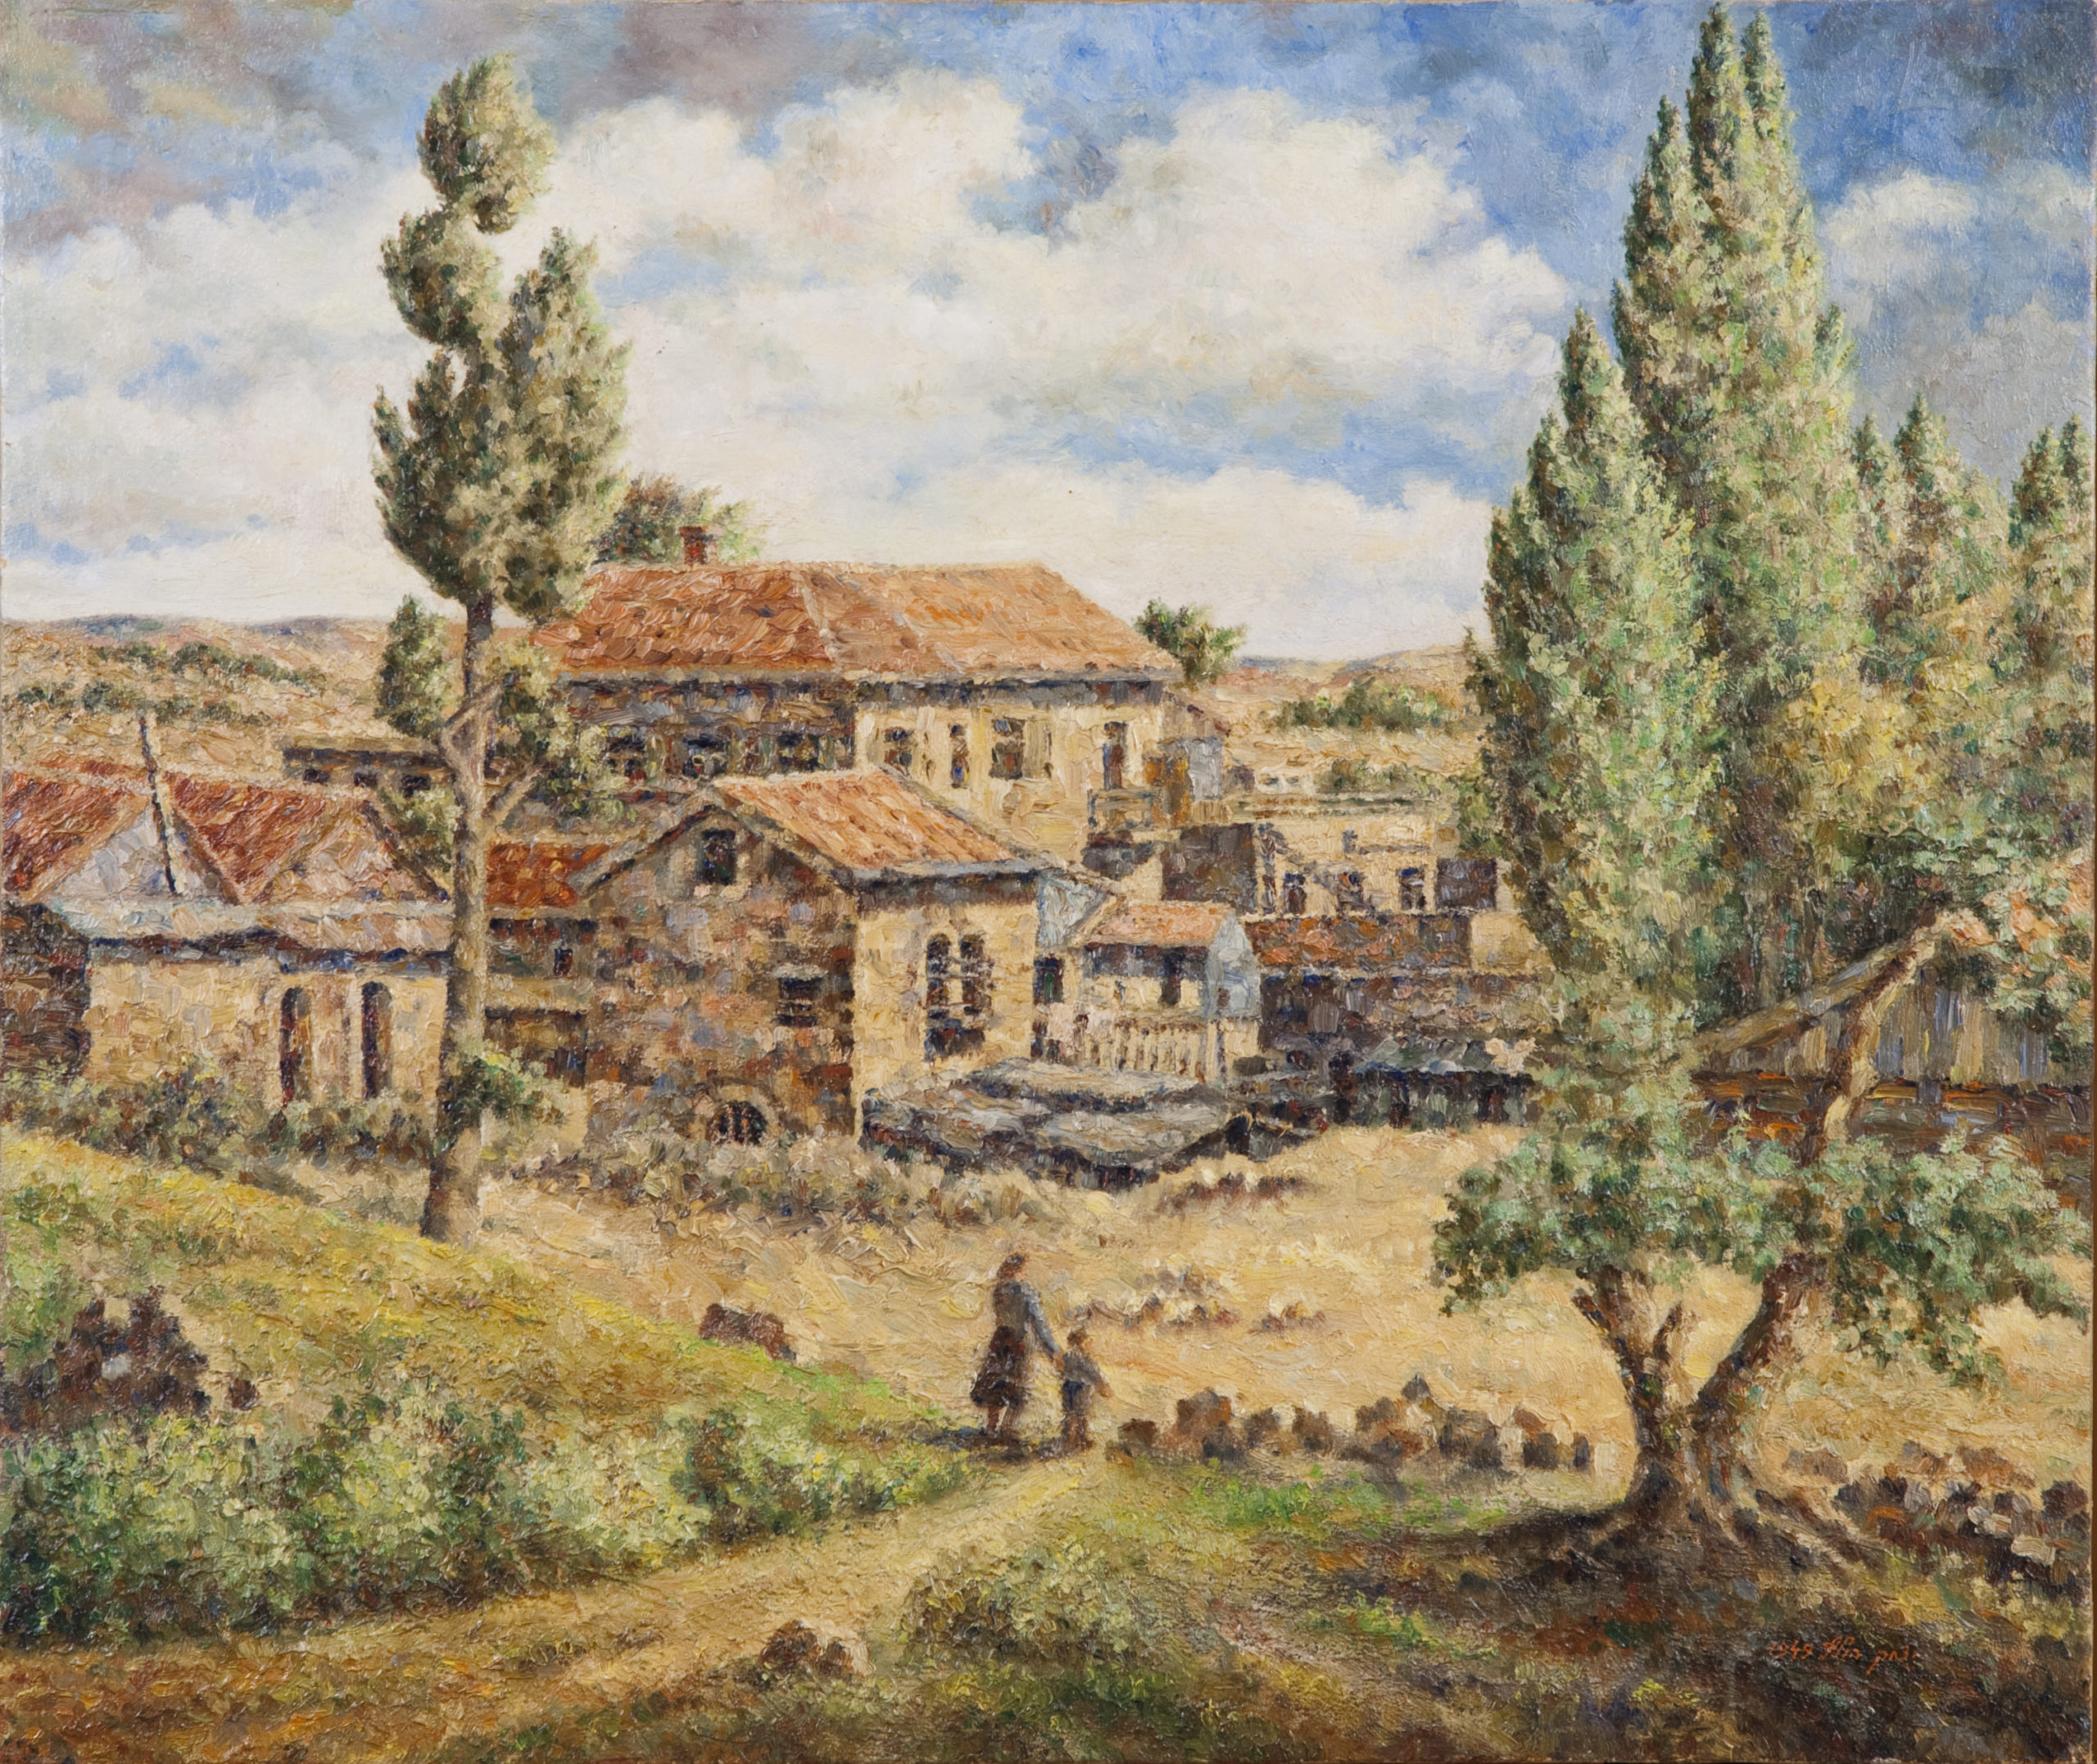 036 Jerusalem Batei Arzah 1949 - Oil on Canvas - 23.5 x 19.5 - Frame: 36 x 32 x 2.25